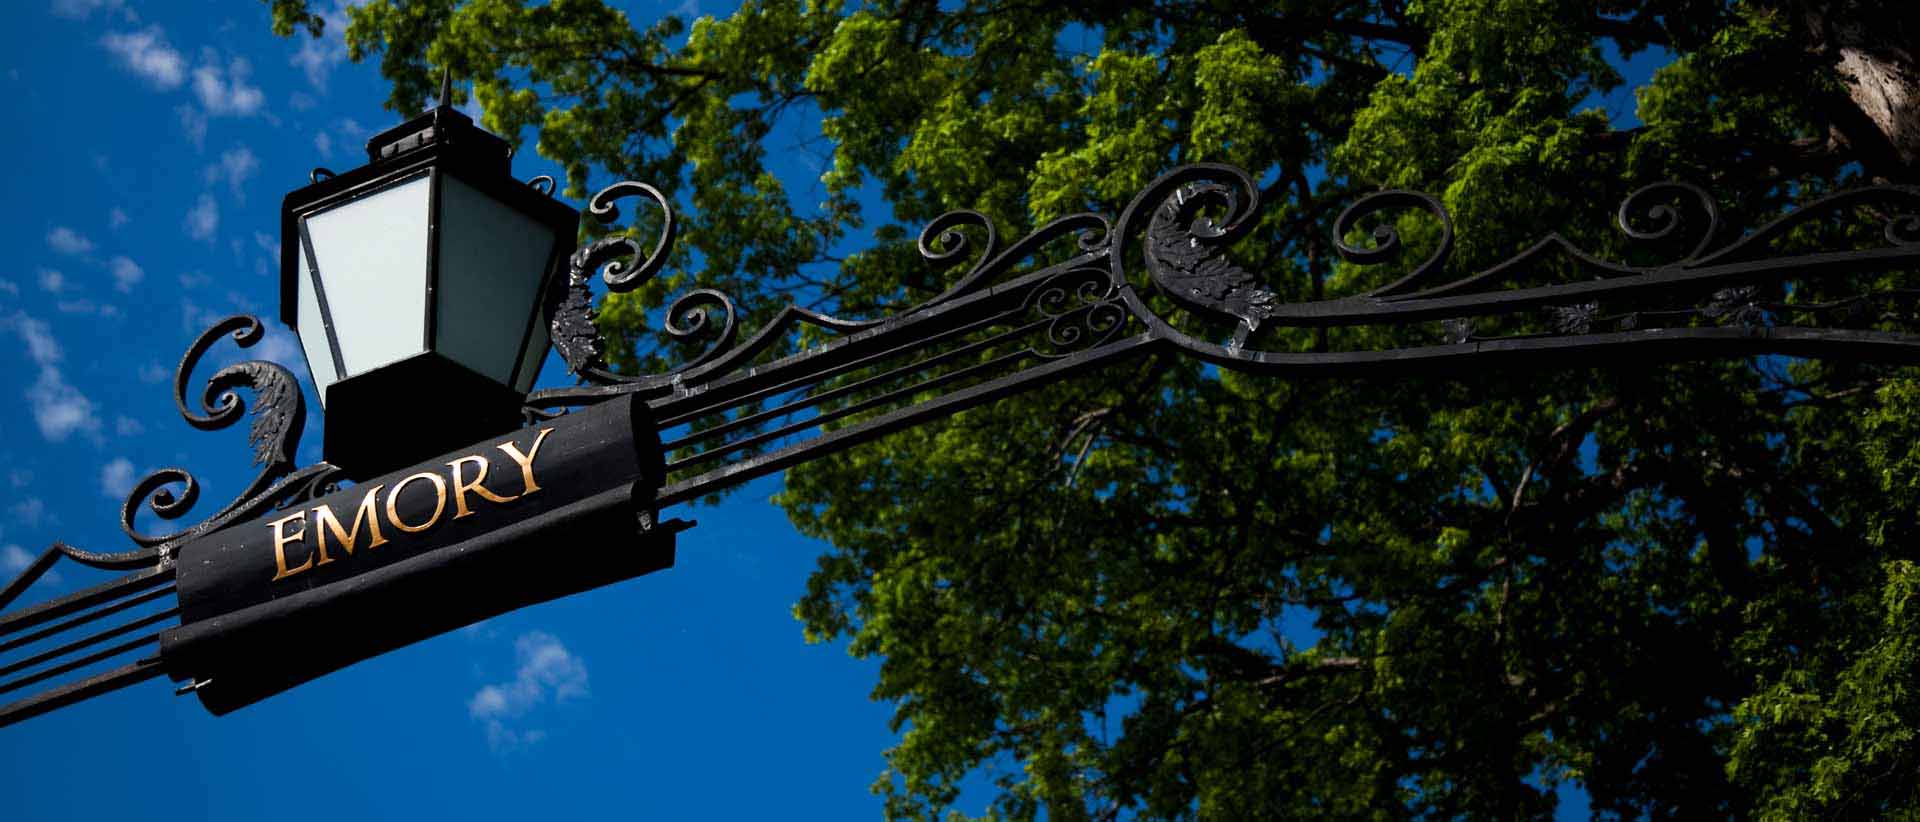 main iron gate of emory university with blue sky